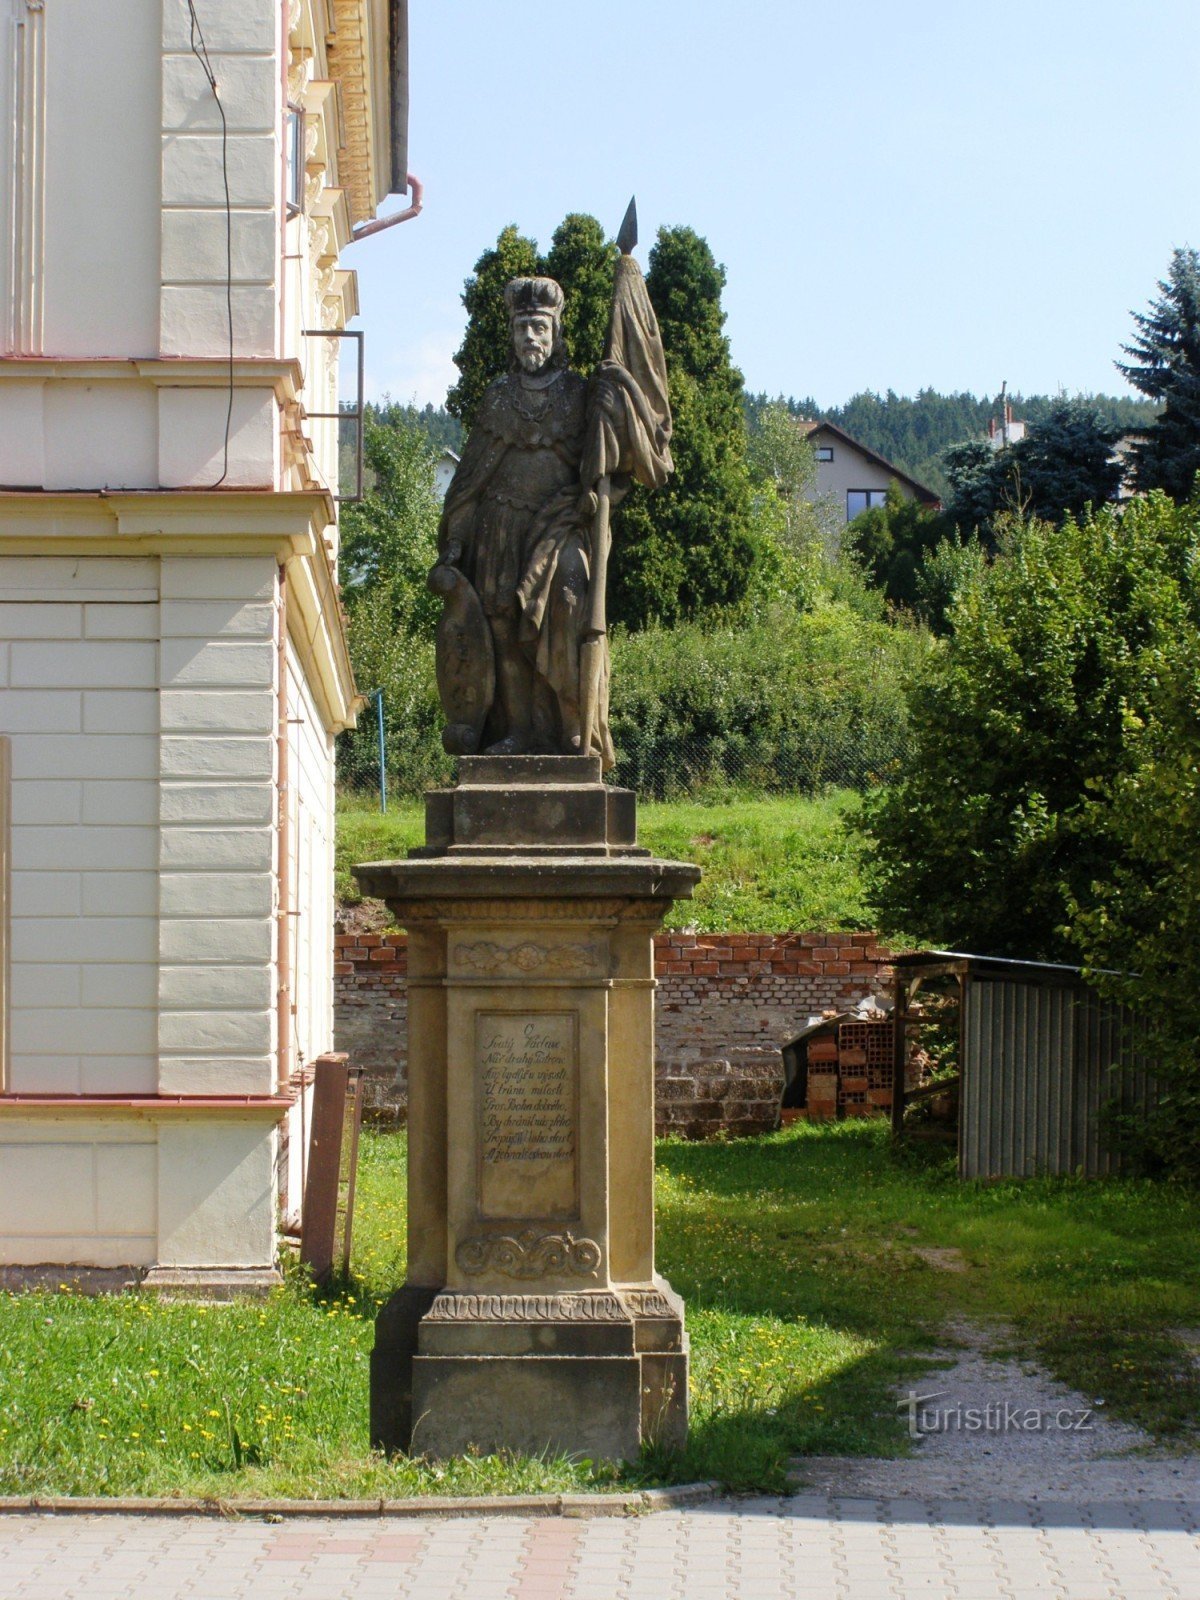 Stará Paka - kipi sv. Ljudmila in sv. Vaclav